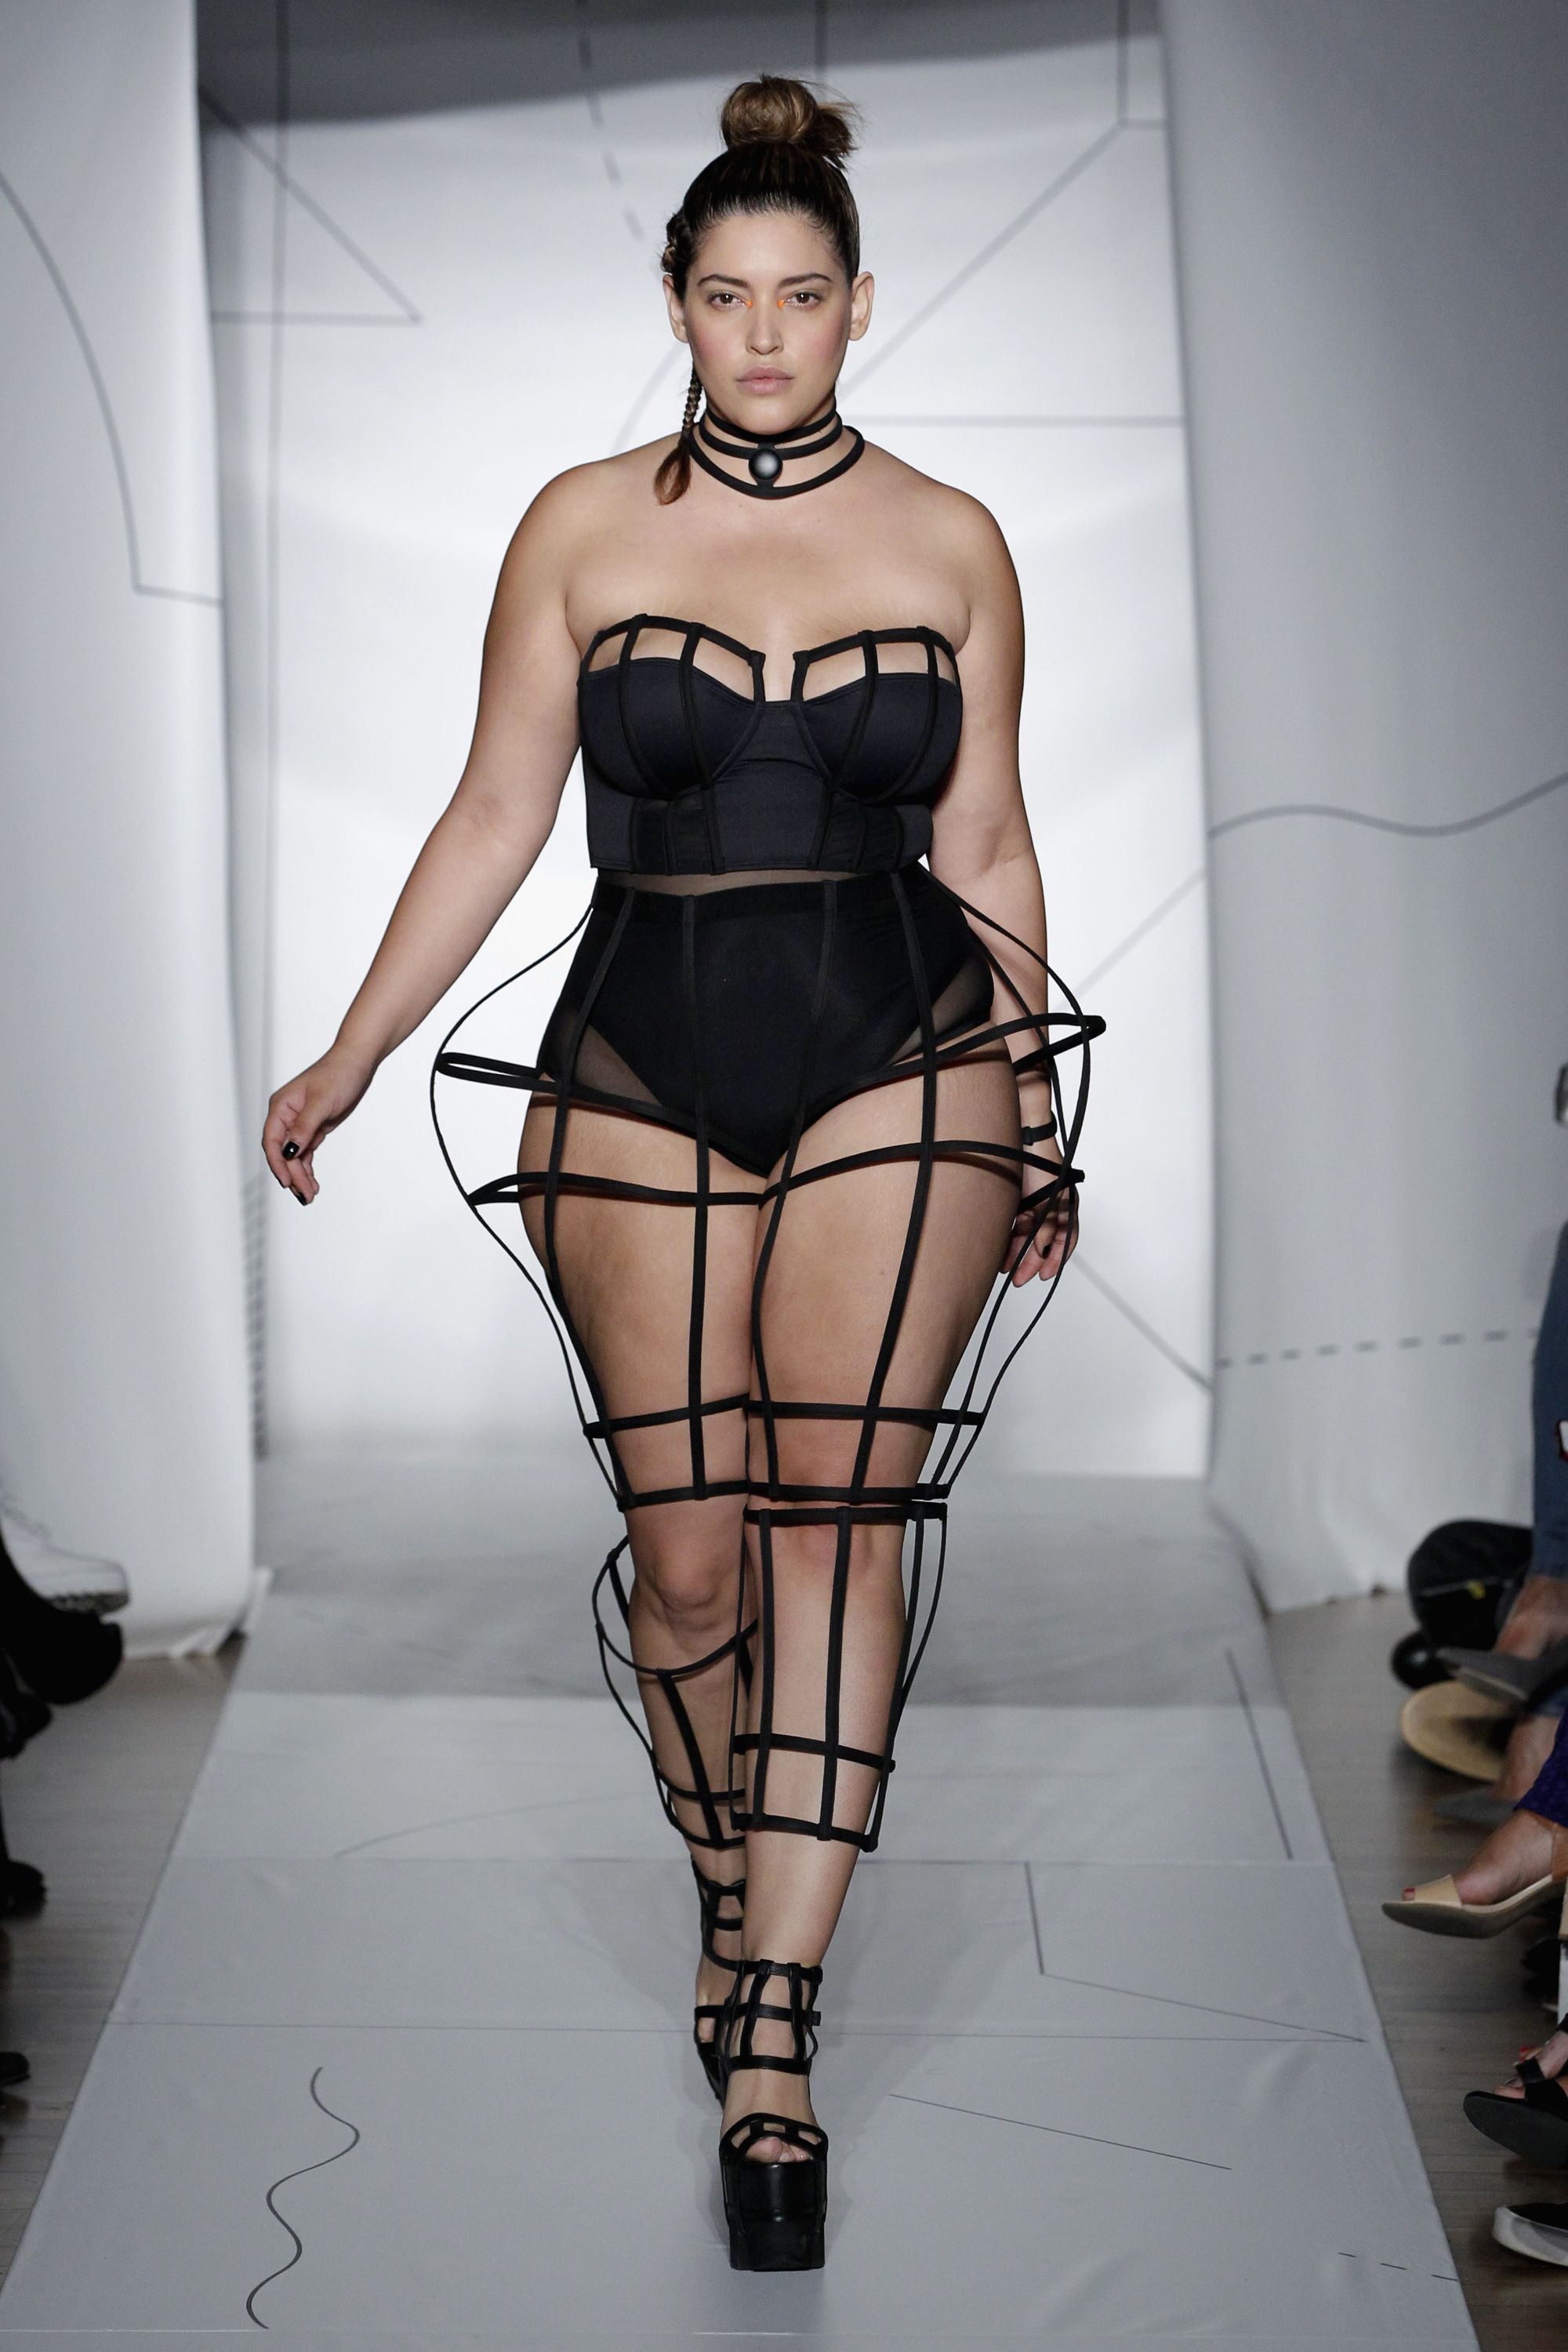 Denish Bidot Com - Plus-Size Famous Models - Notable Models Changing Fashion Industry